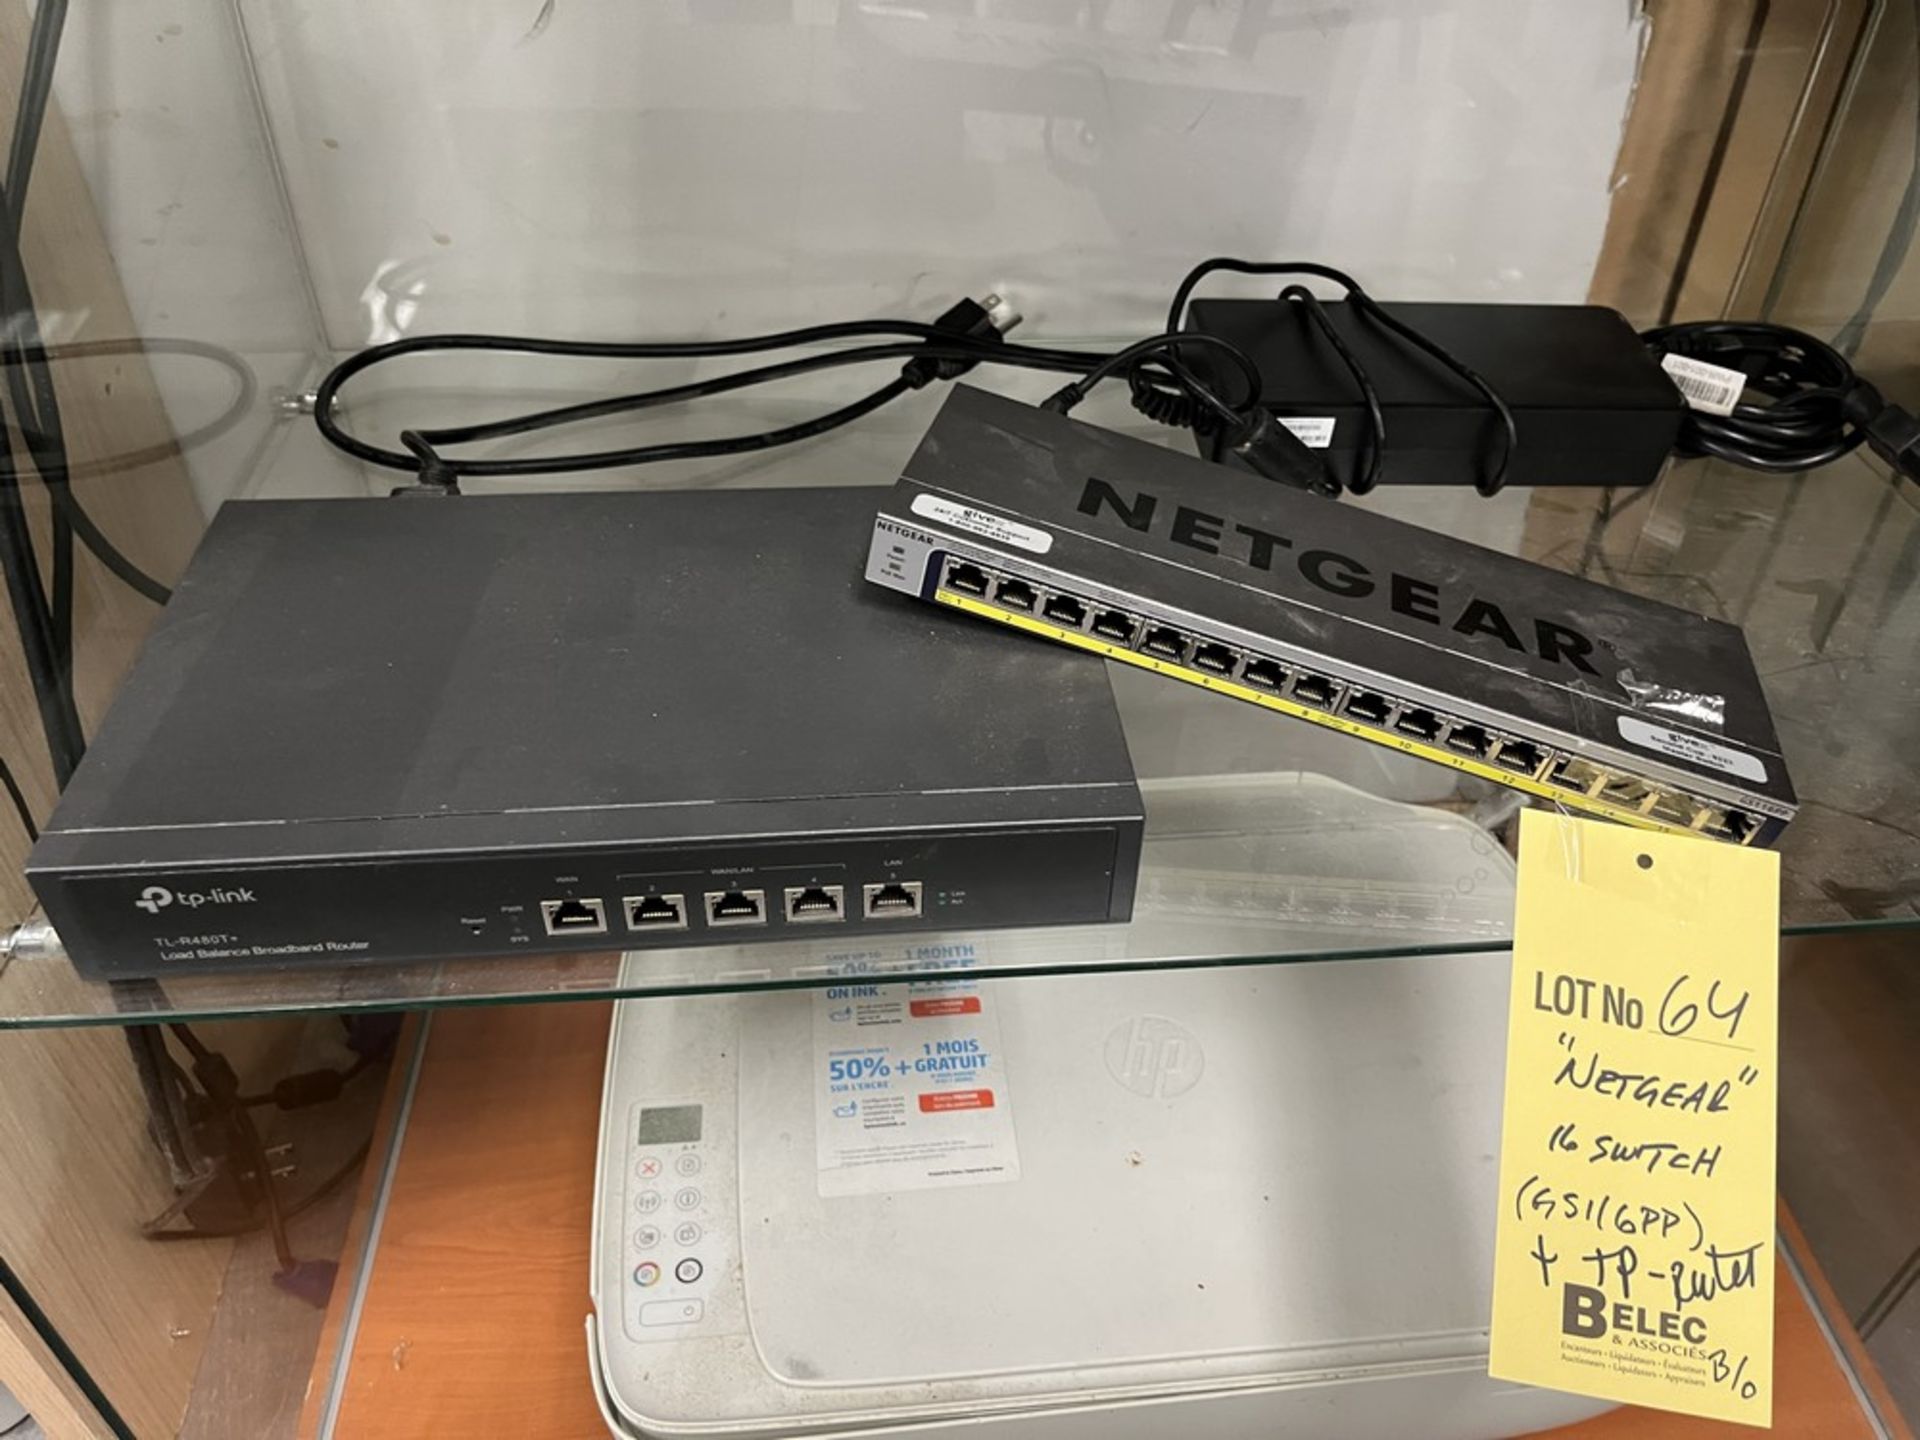 NETGEAR 16 switch + TP router